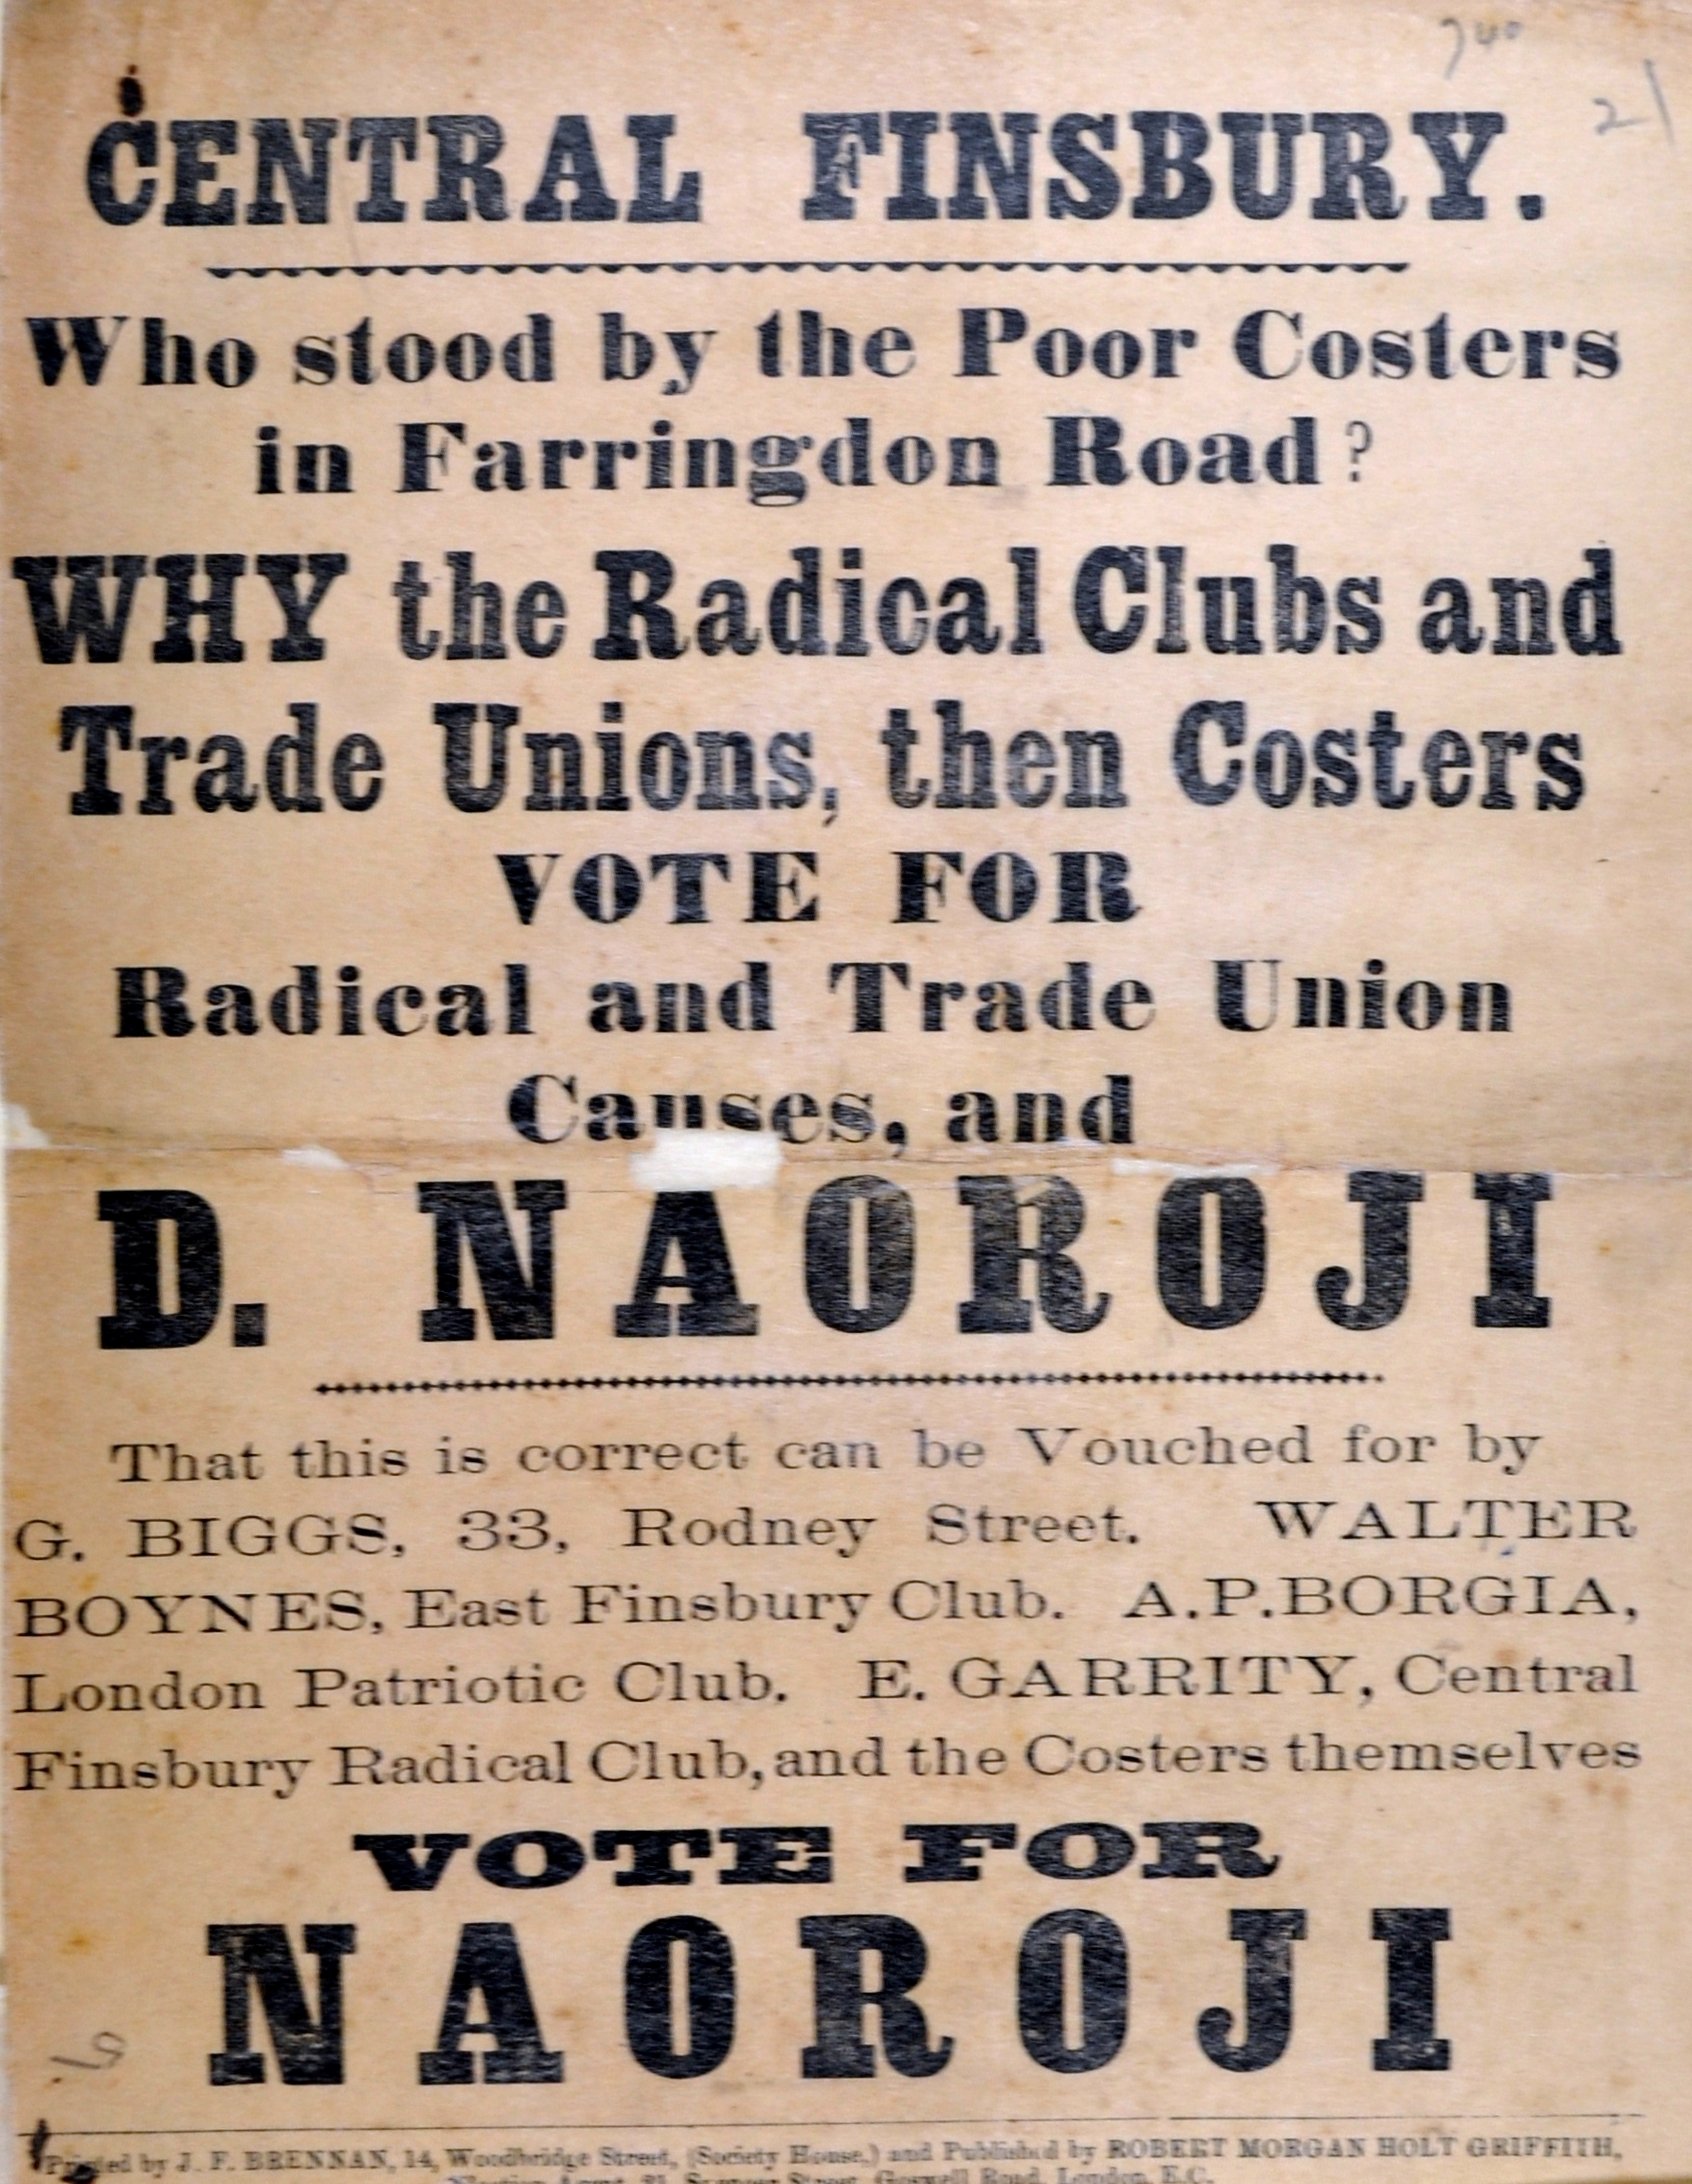 A flyer for Naoroji’s parliamentary campaign